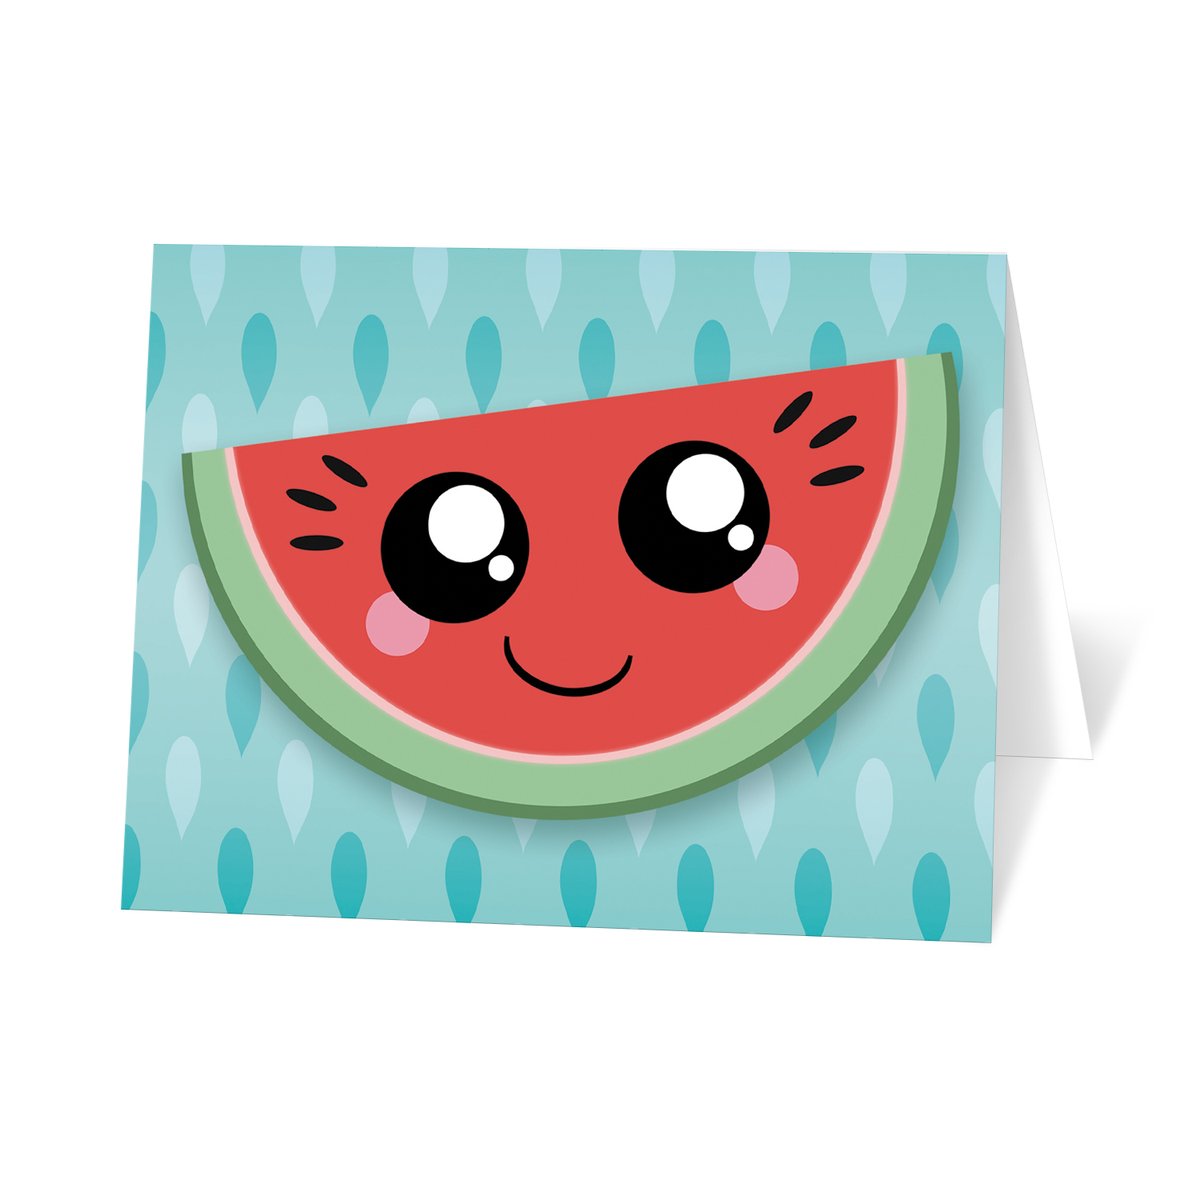 watermelon clipart smiling watermelon